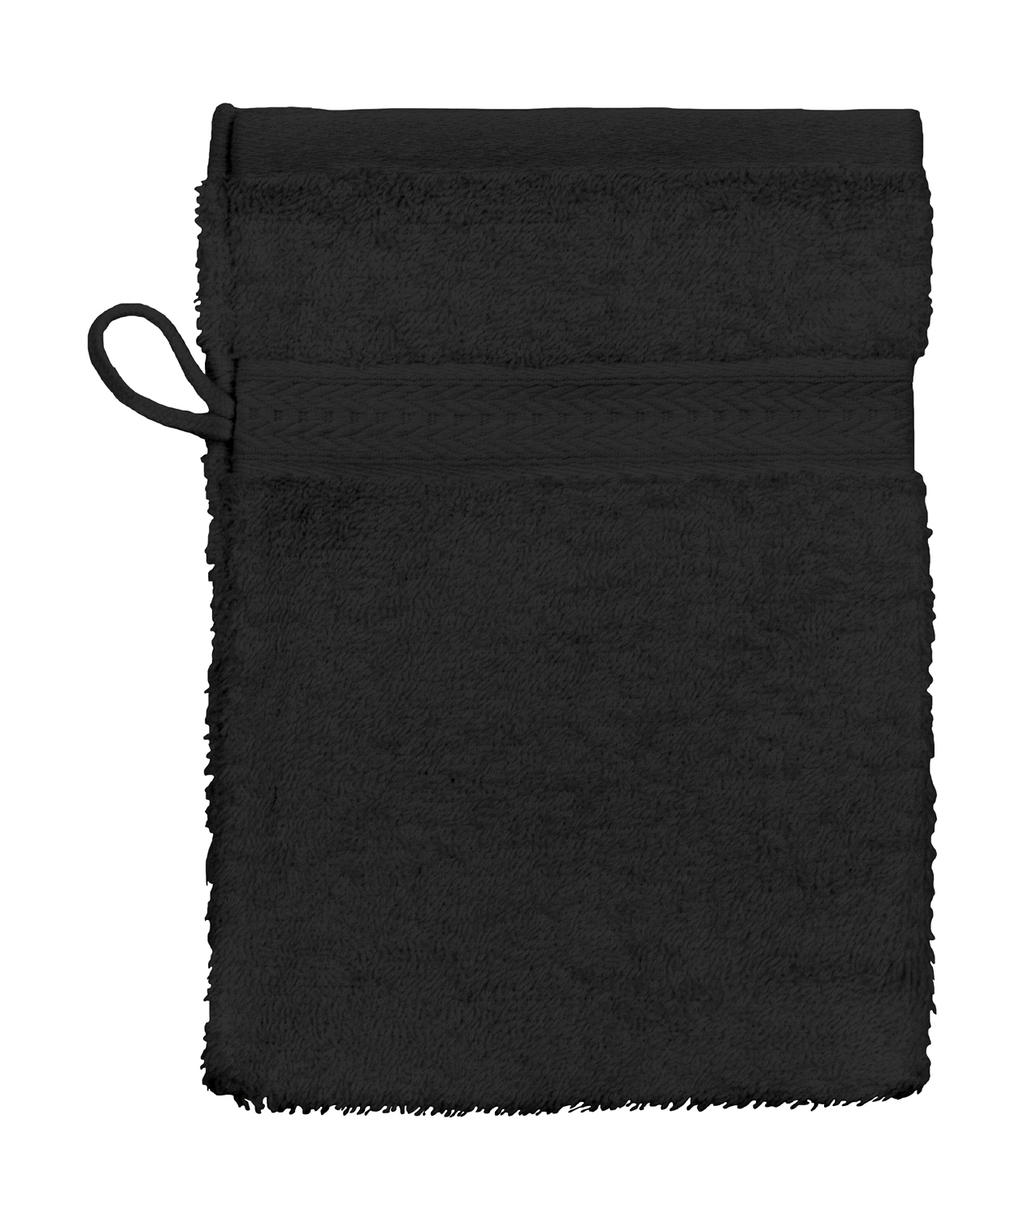  Rhine Wash Glove 16x22 cm in Farbe Black